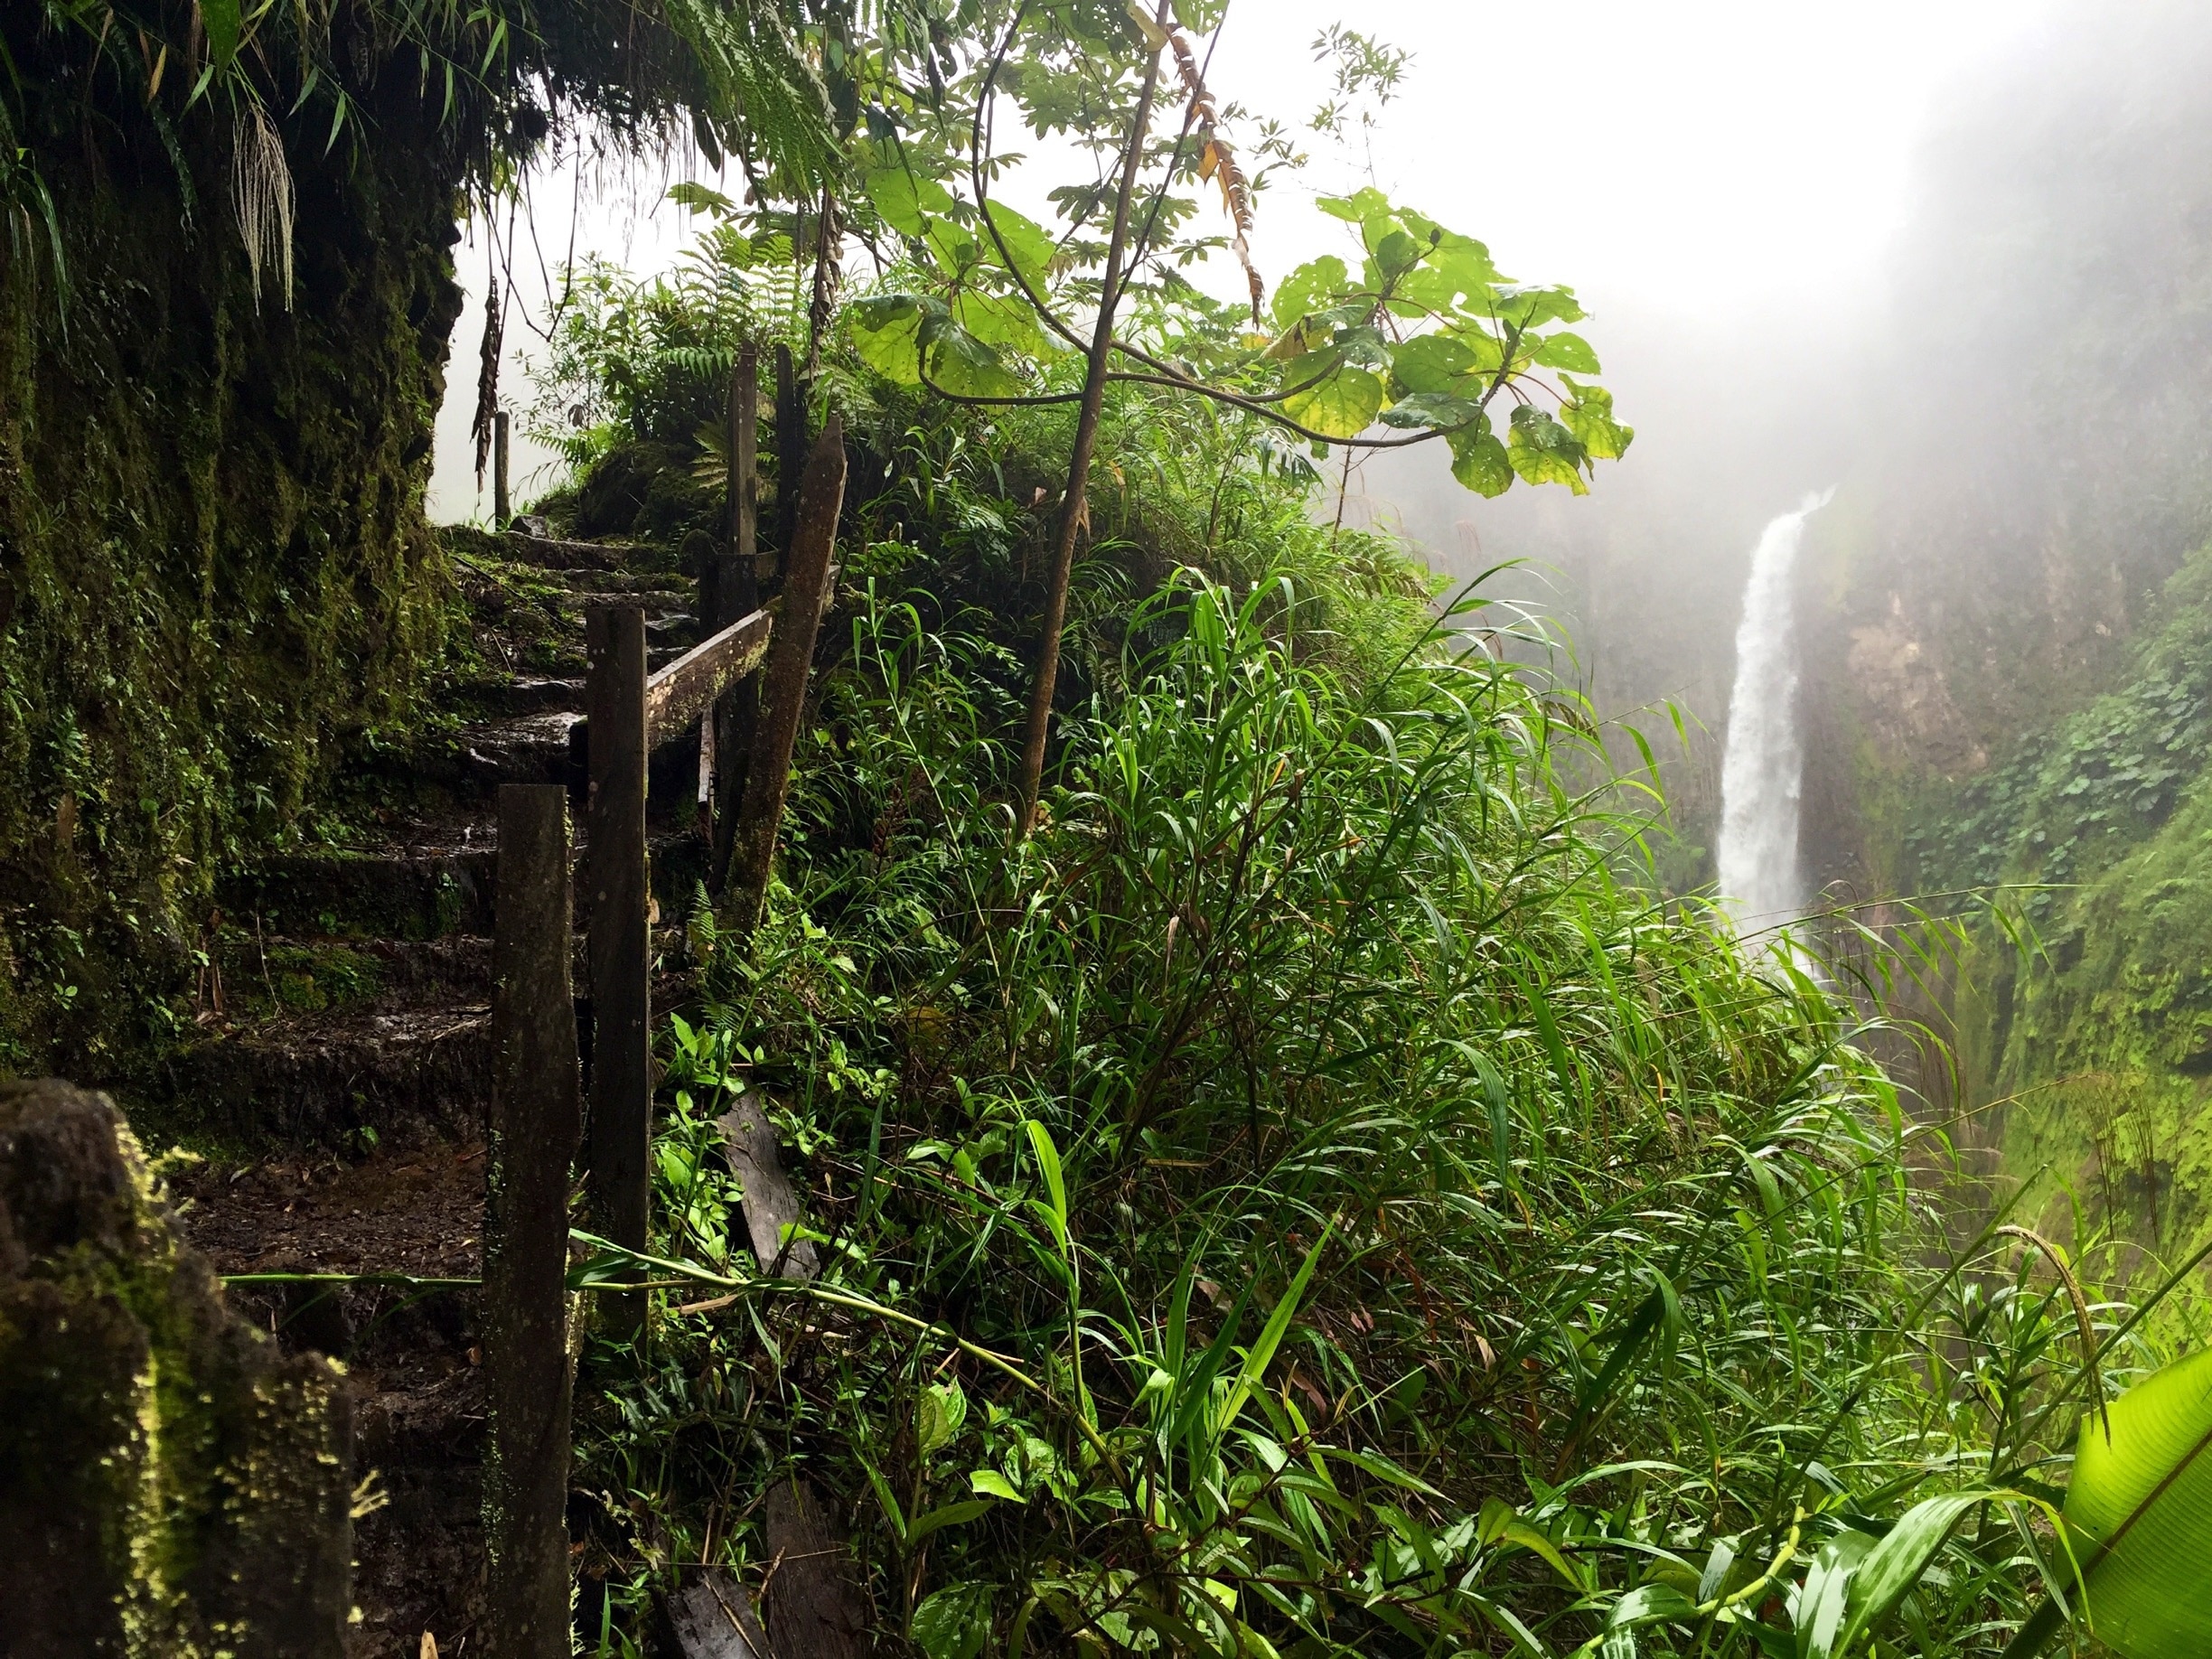 Wonderous hidden gem in Costa Rica. The most beautiful waterfall I've ever seen.